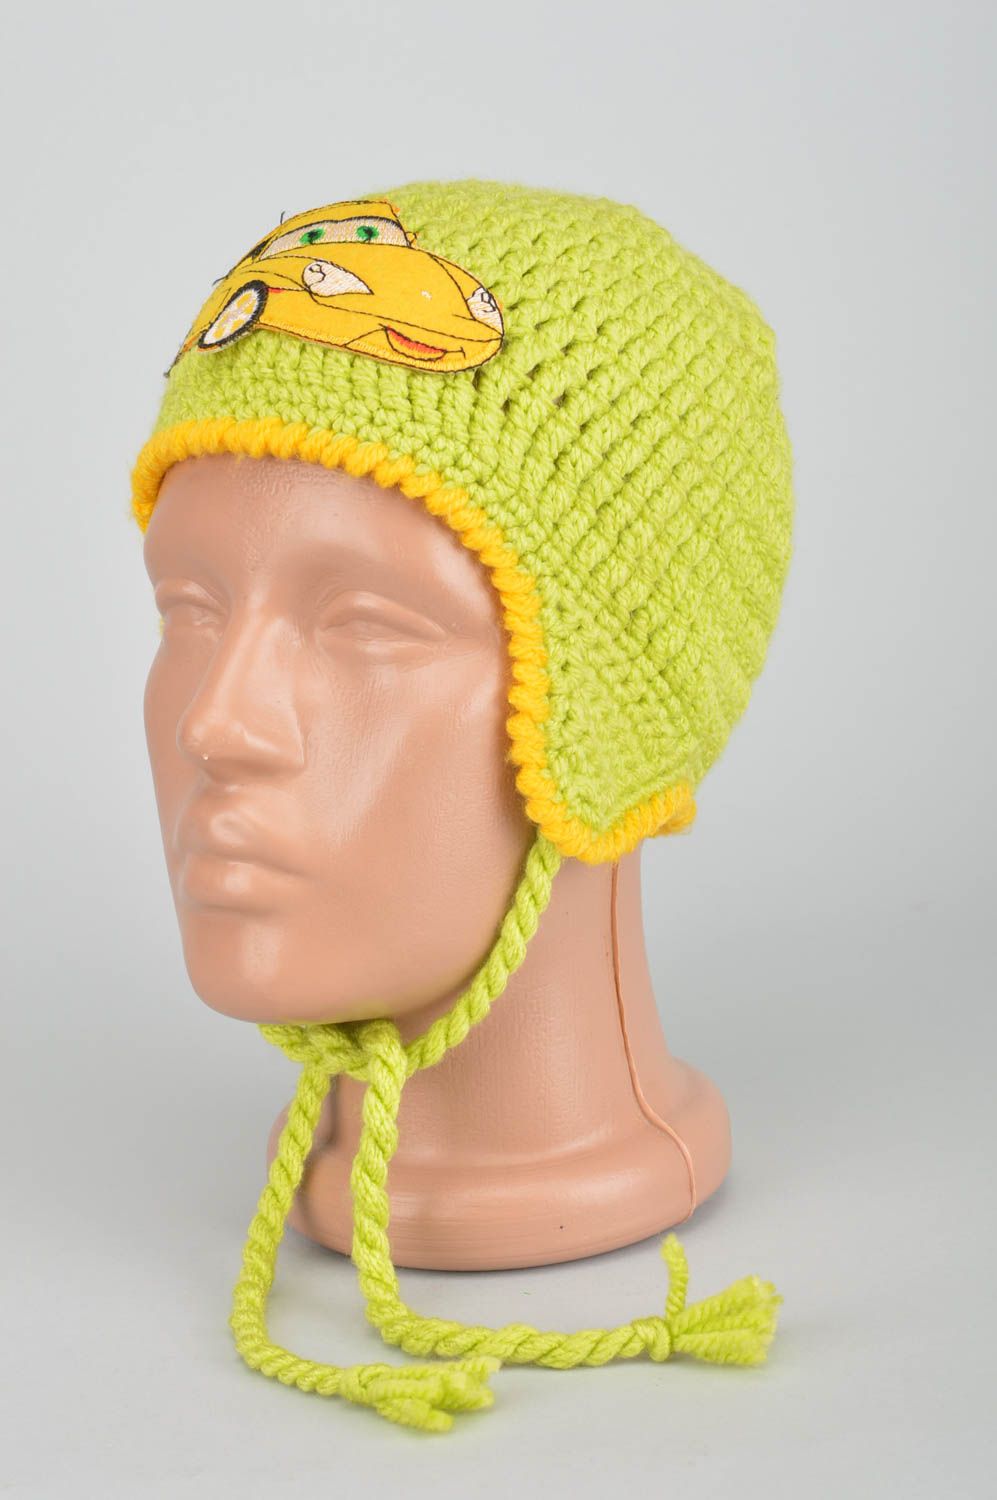 Handmade knitted cap headwear for boys yellow stylish cap winter warm cap photo 1